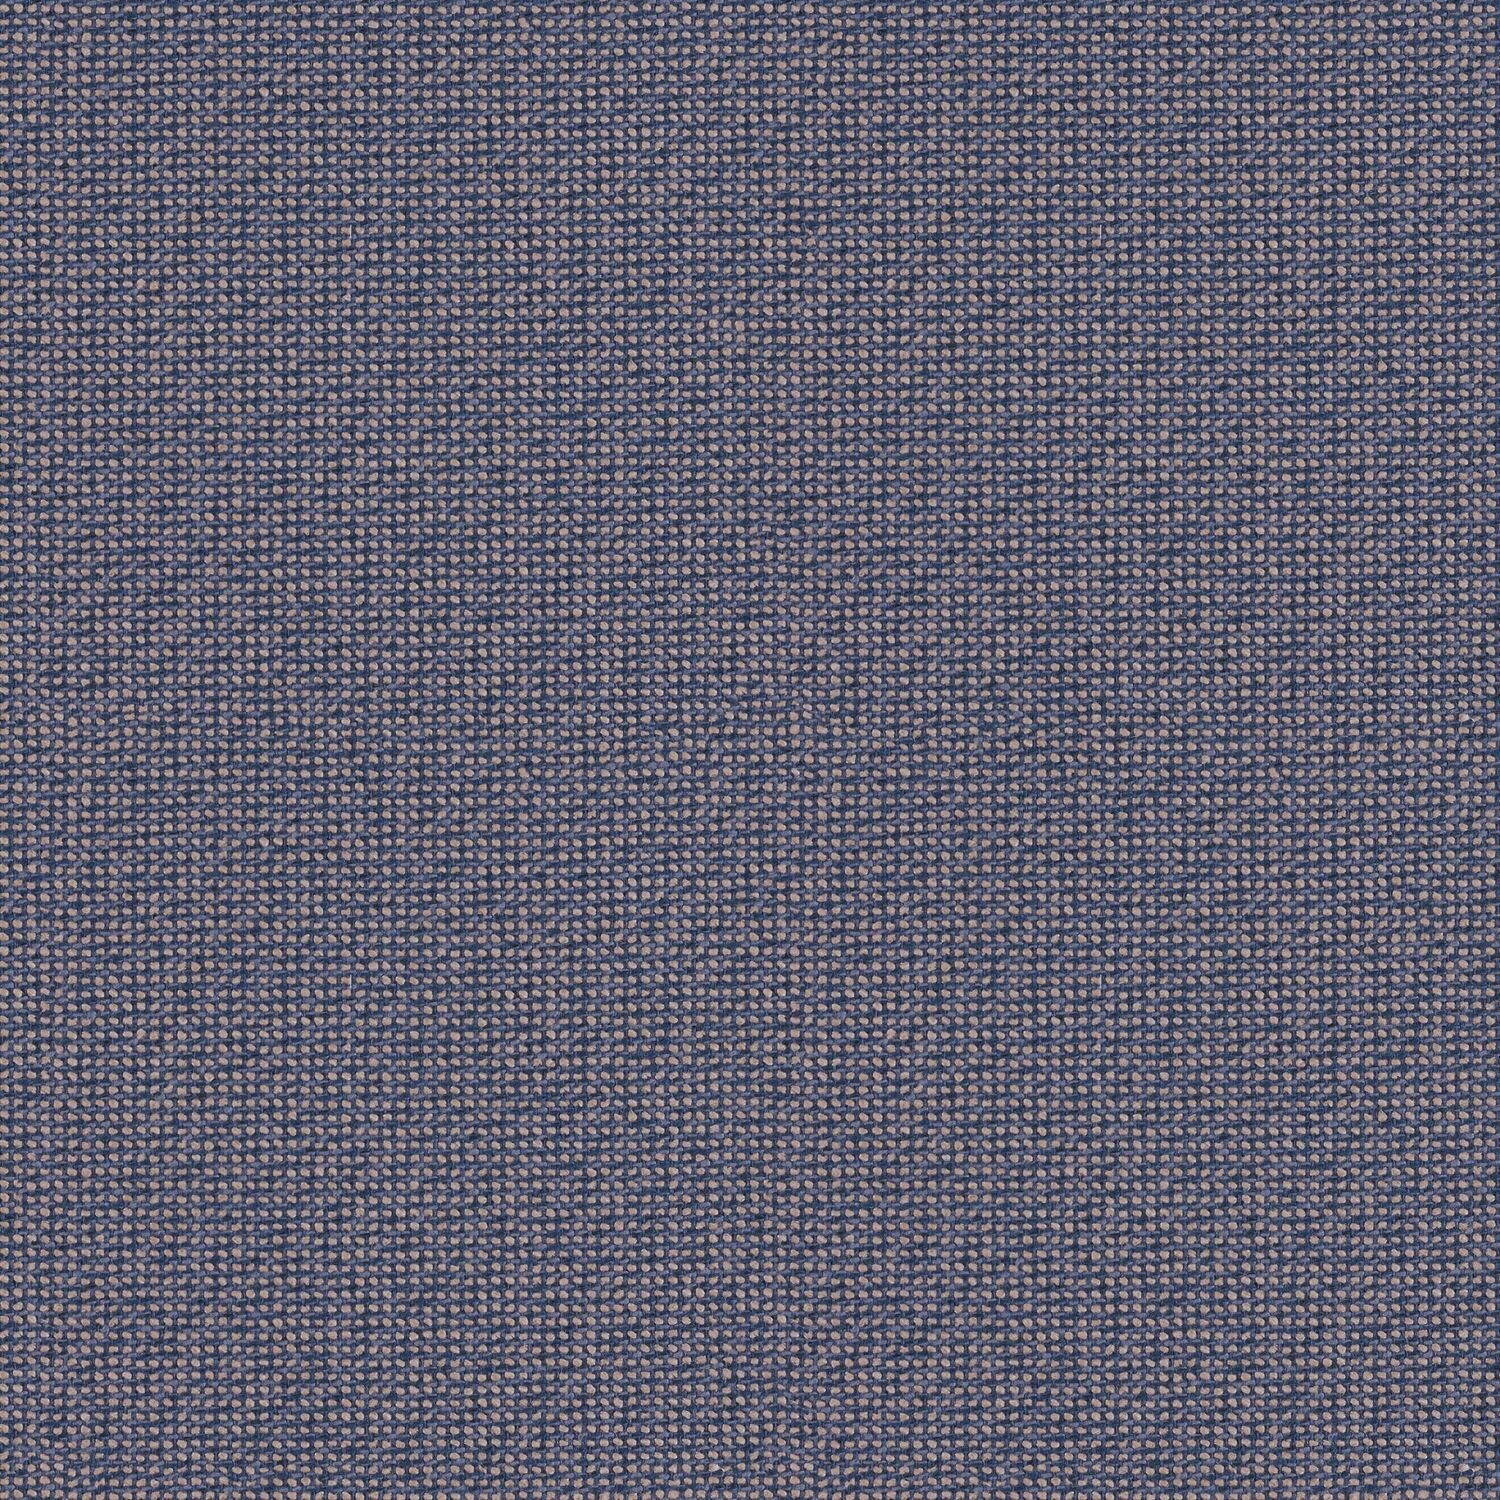 Twisted Tweed - Perennial - 4096 - 14 - Half Yard